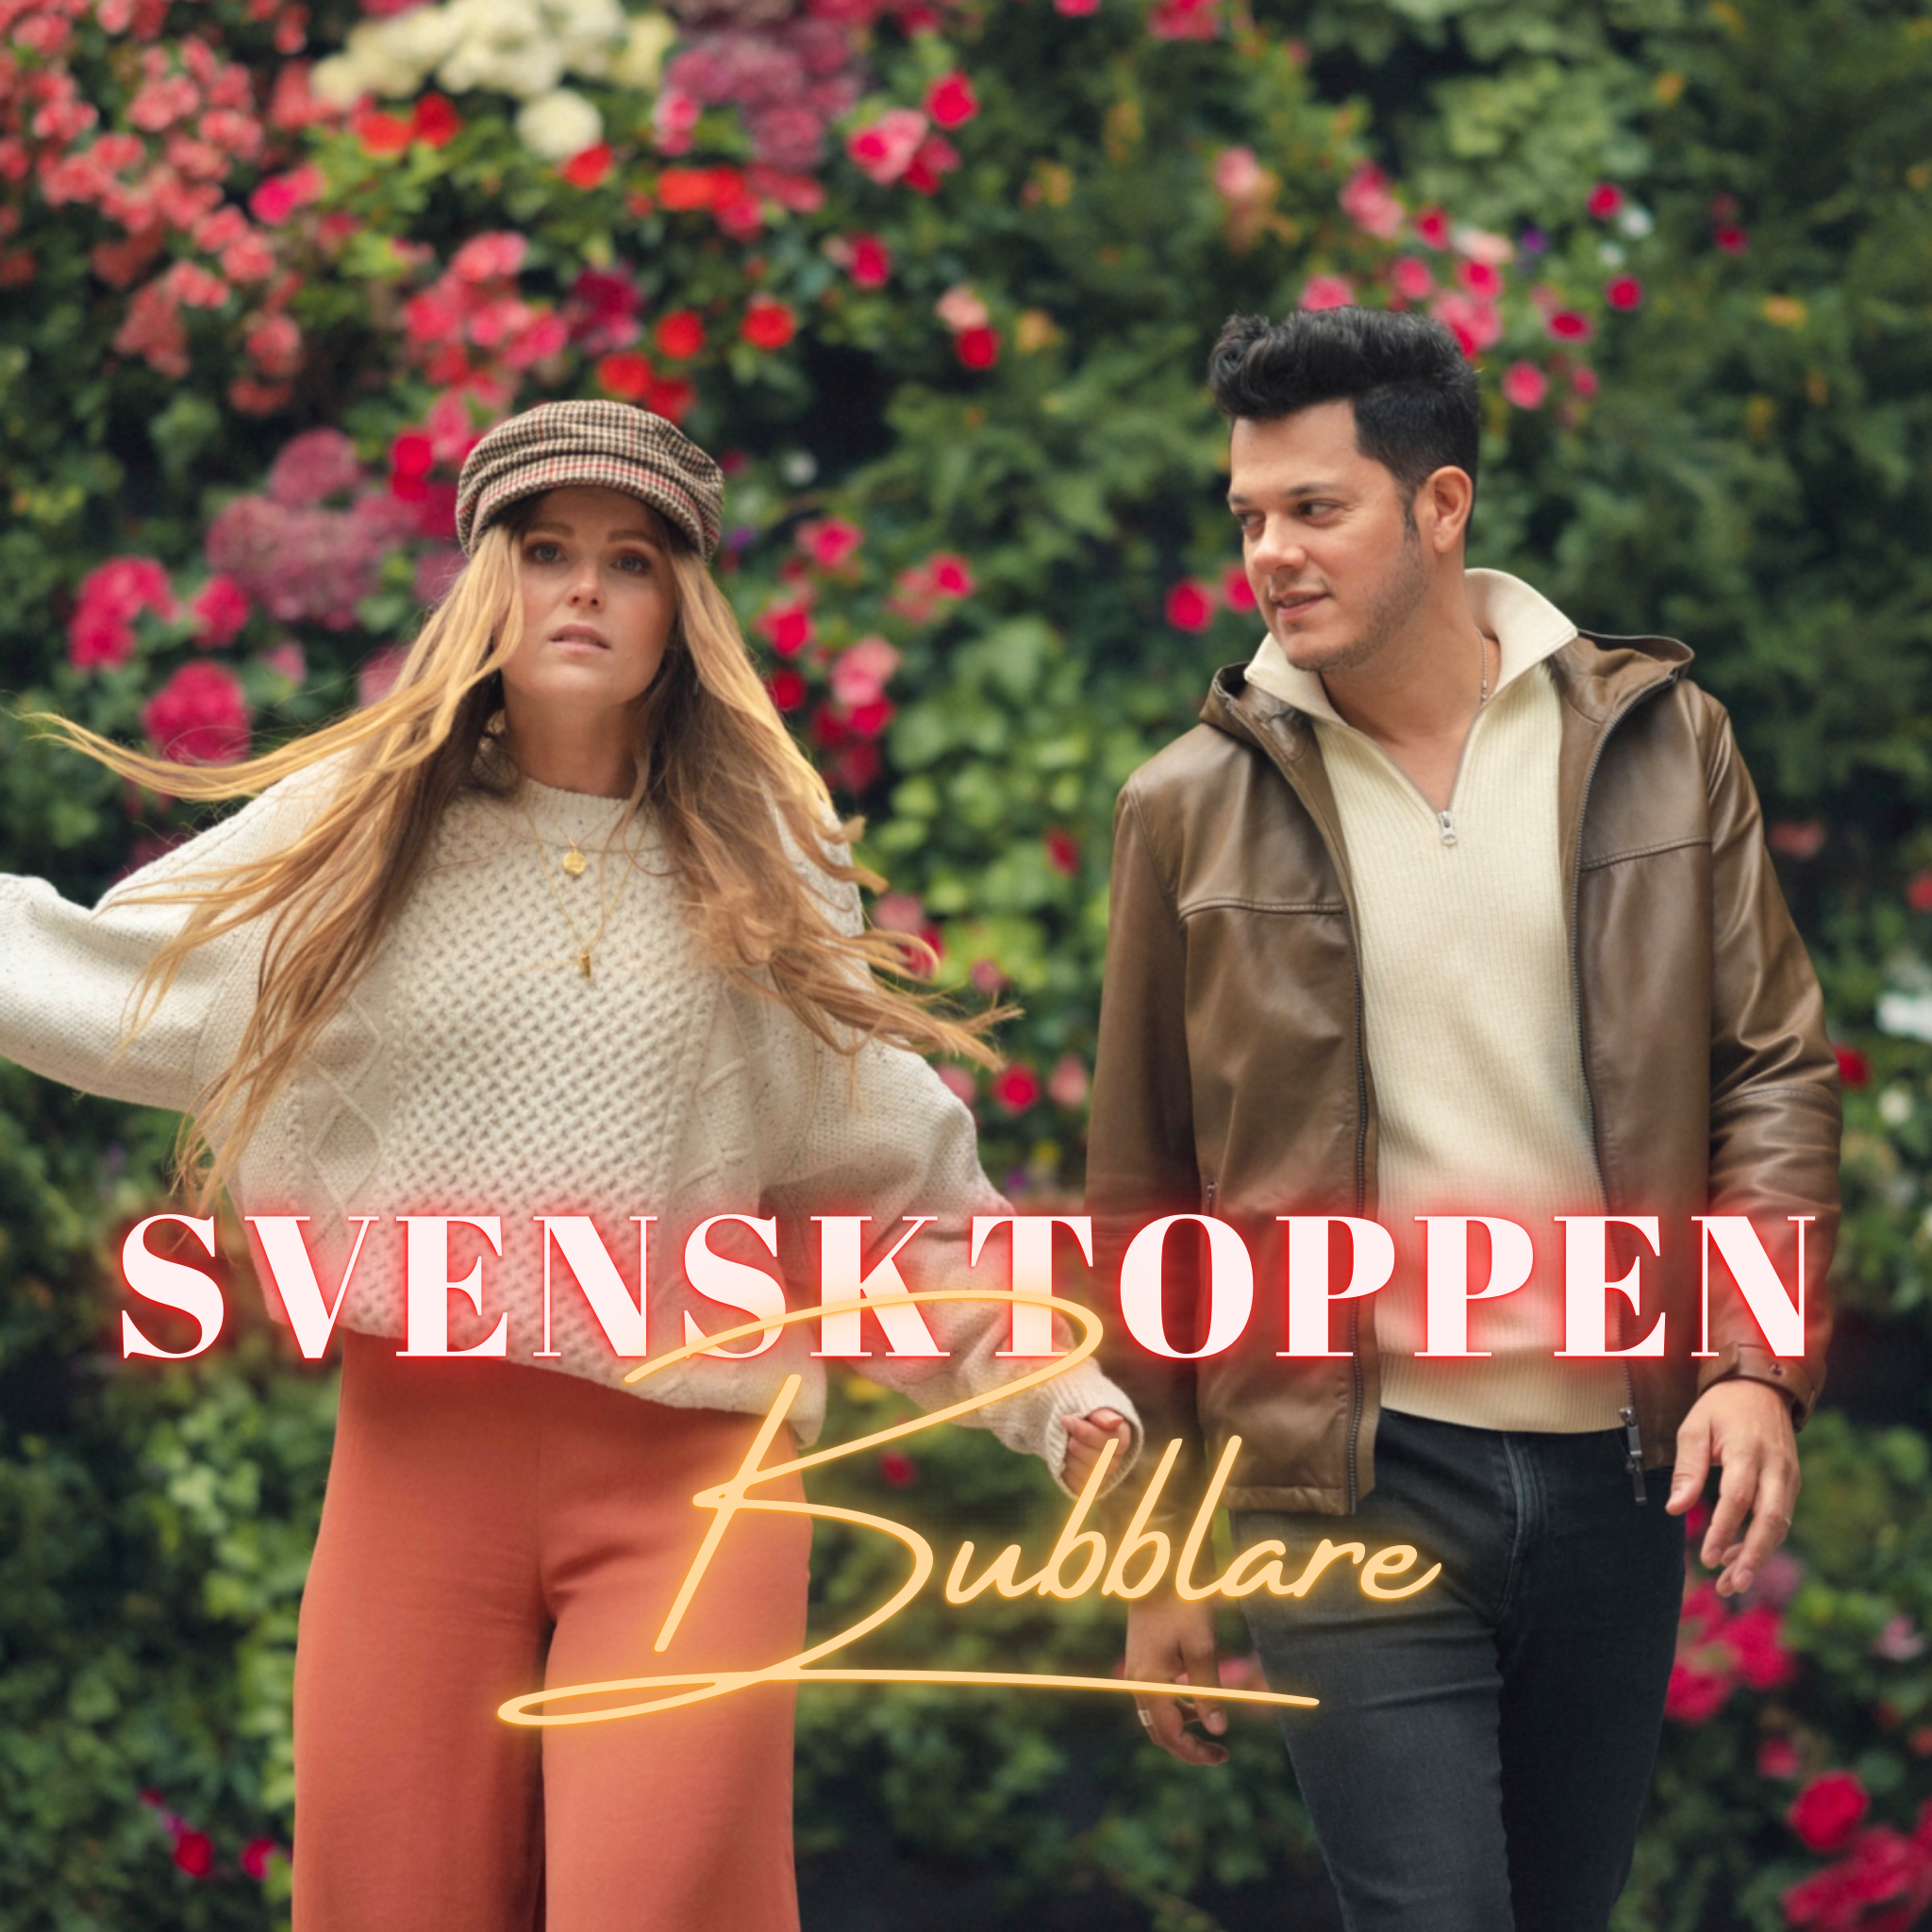 “Bubblare” on Svensktoppen